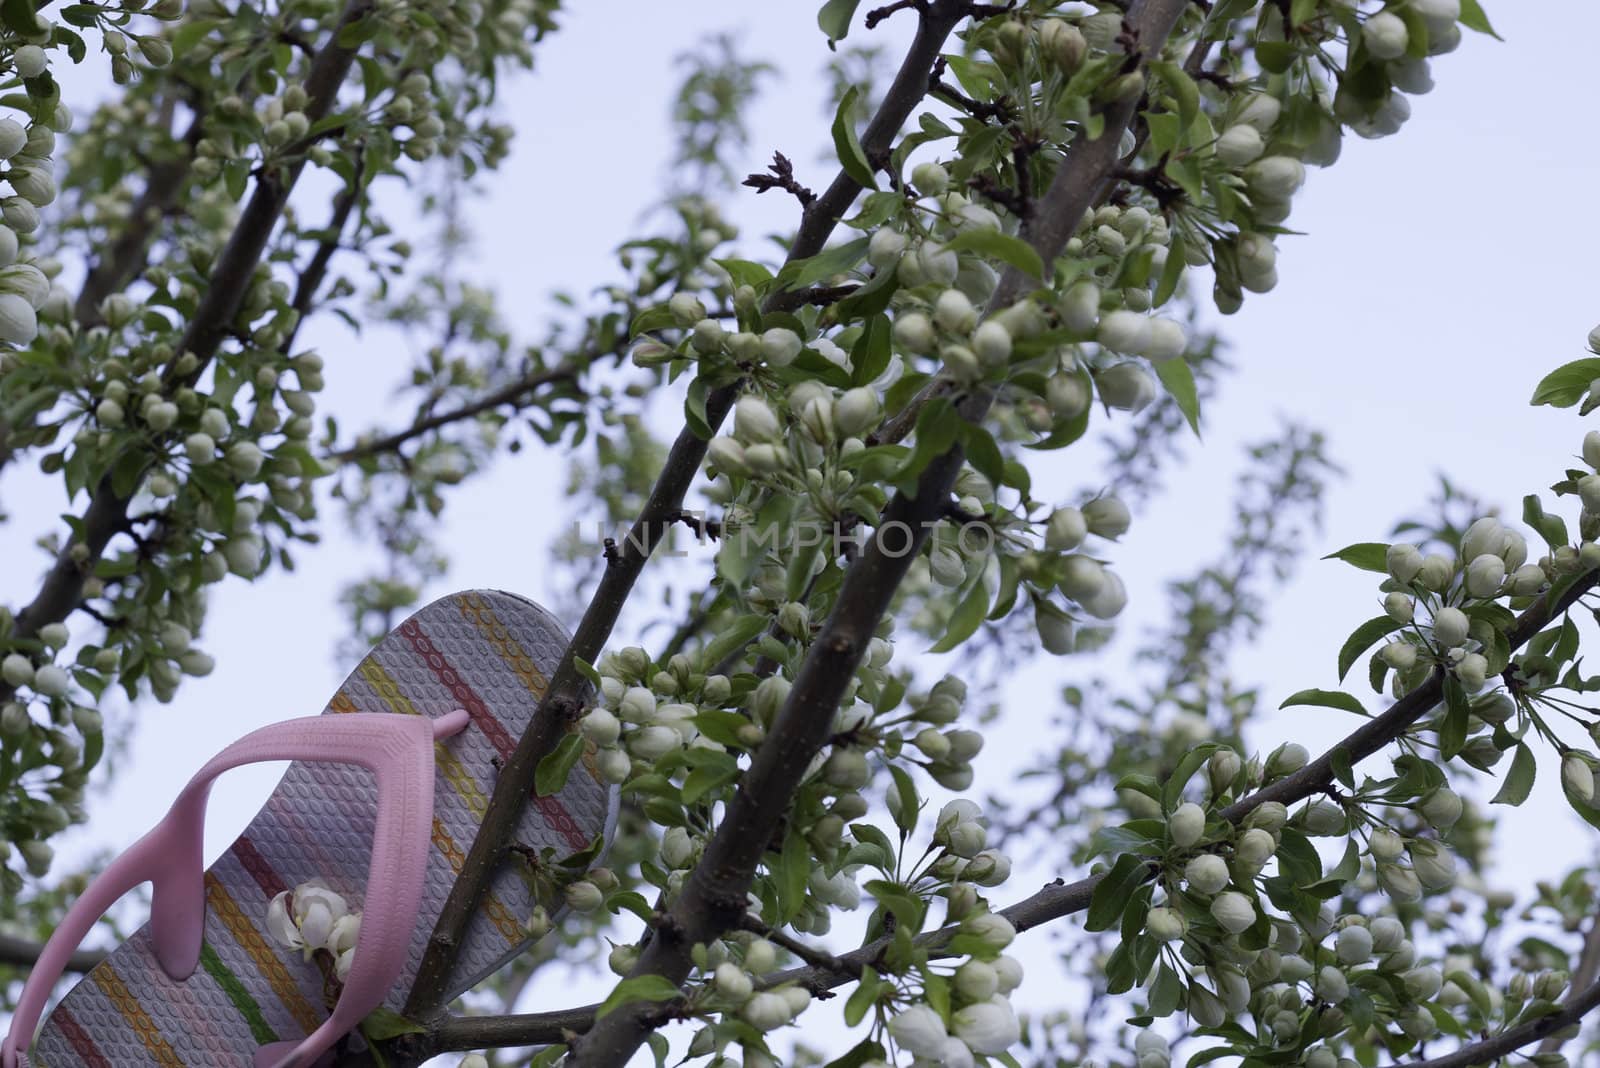 pink children's shoe stuck in blossom tree